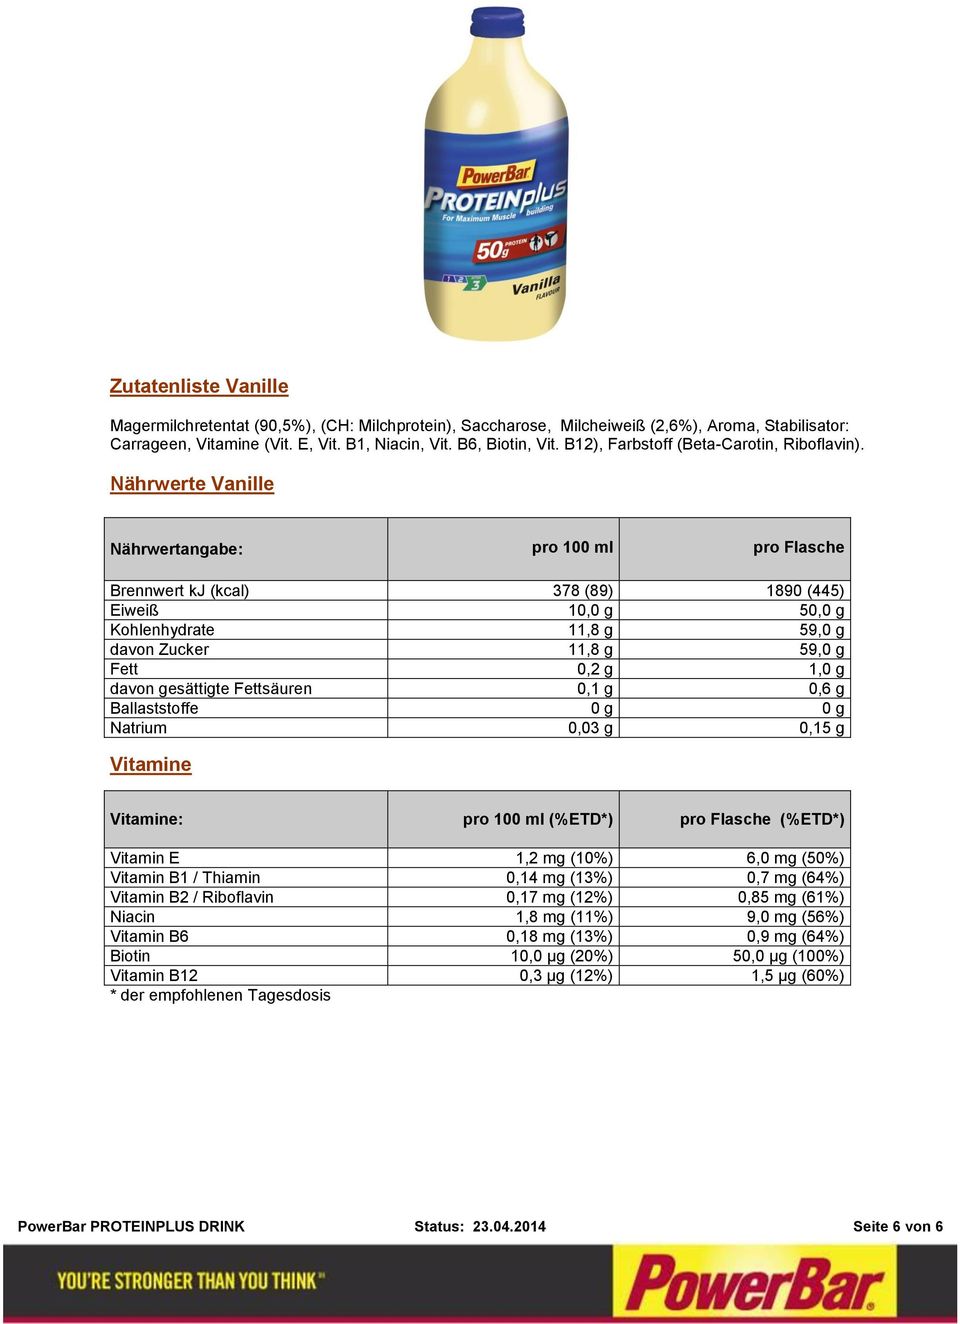 Nährwerte Vanille Nährwertangabe: pro 100 ml pro Flasche Brennwert kj (kcal) 378 (89) 1890 (445) Kohlenhydrate 11,8 g 59,0 g davon Zucker